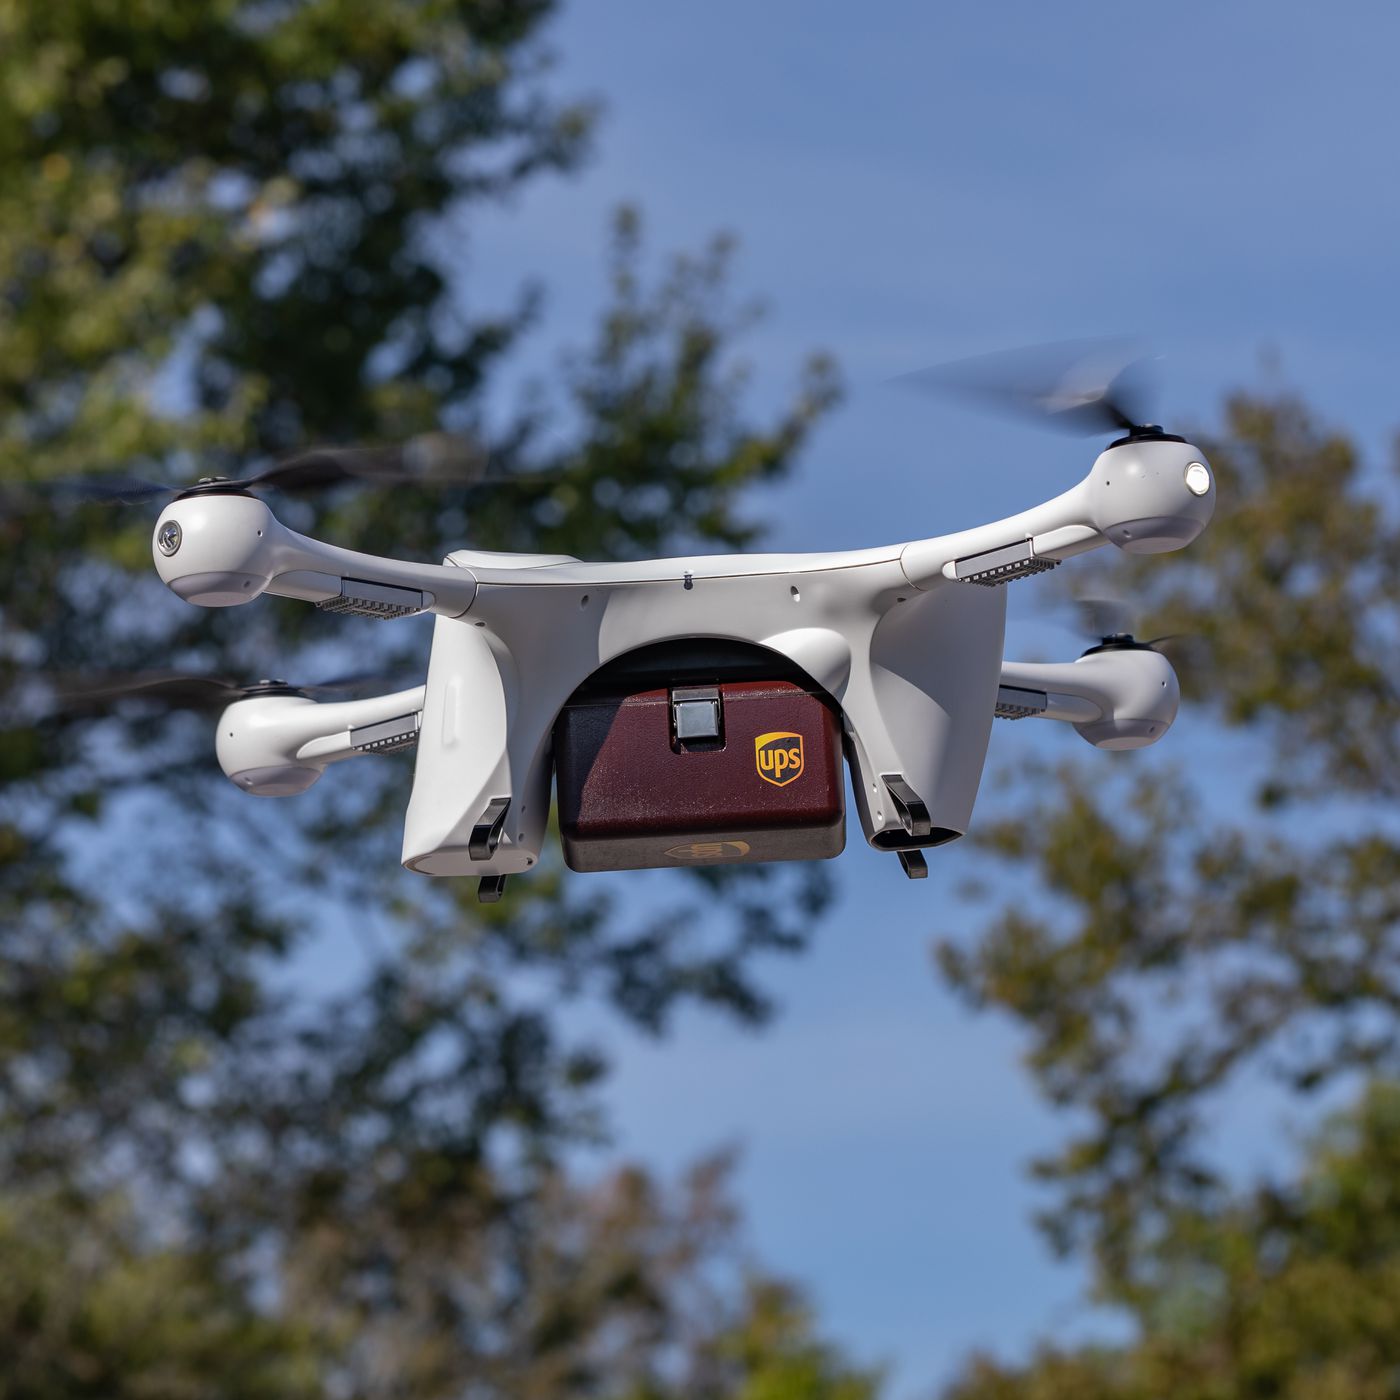 Salon De Jardin Leclerc 2020 Charmant Ups Delivers Prescription Medications to Us Homes by Drone